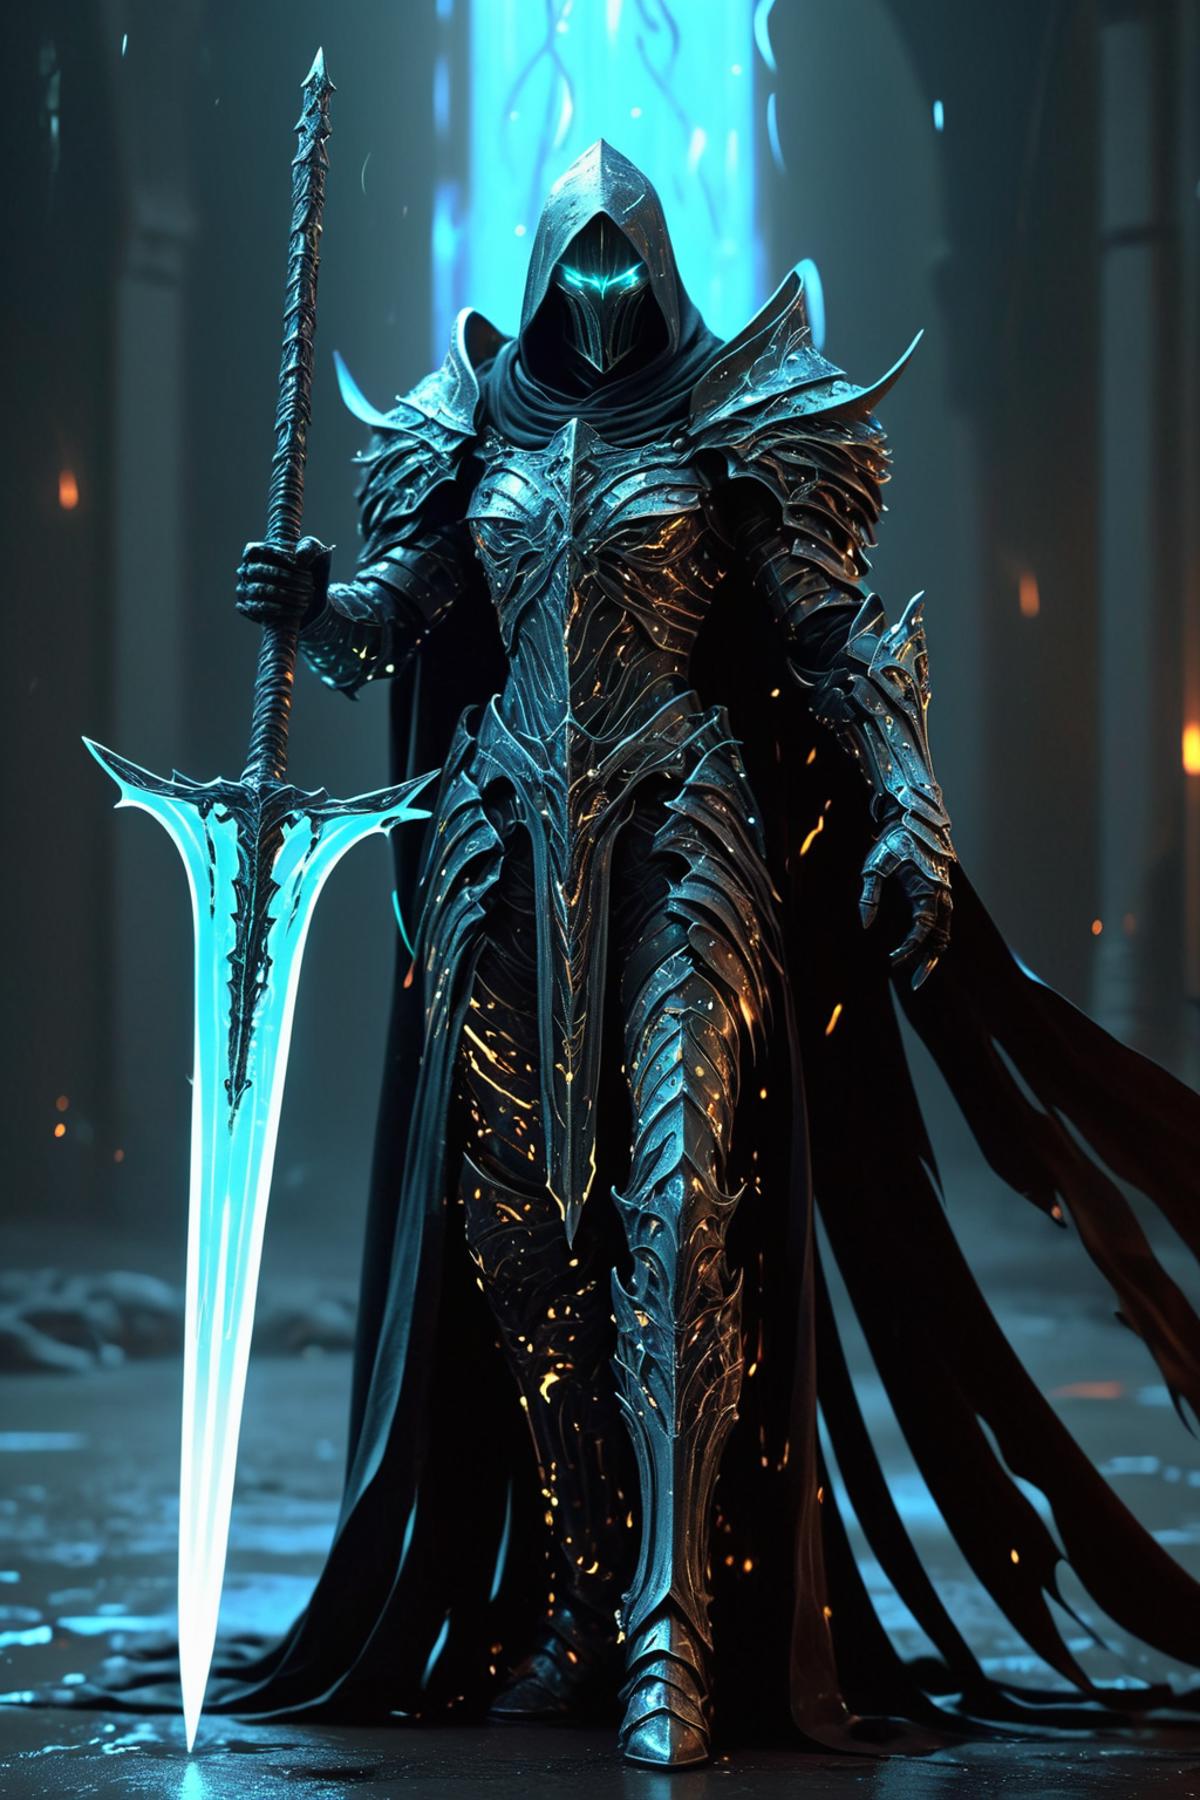 A Dark Knight Warrior in Armor Holding a Blue Sword